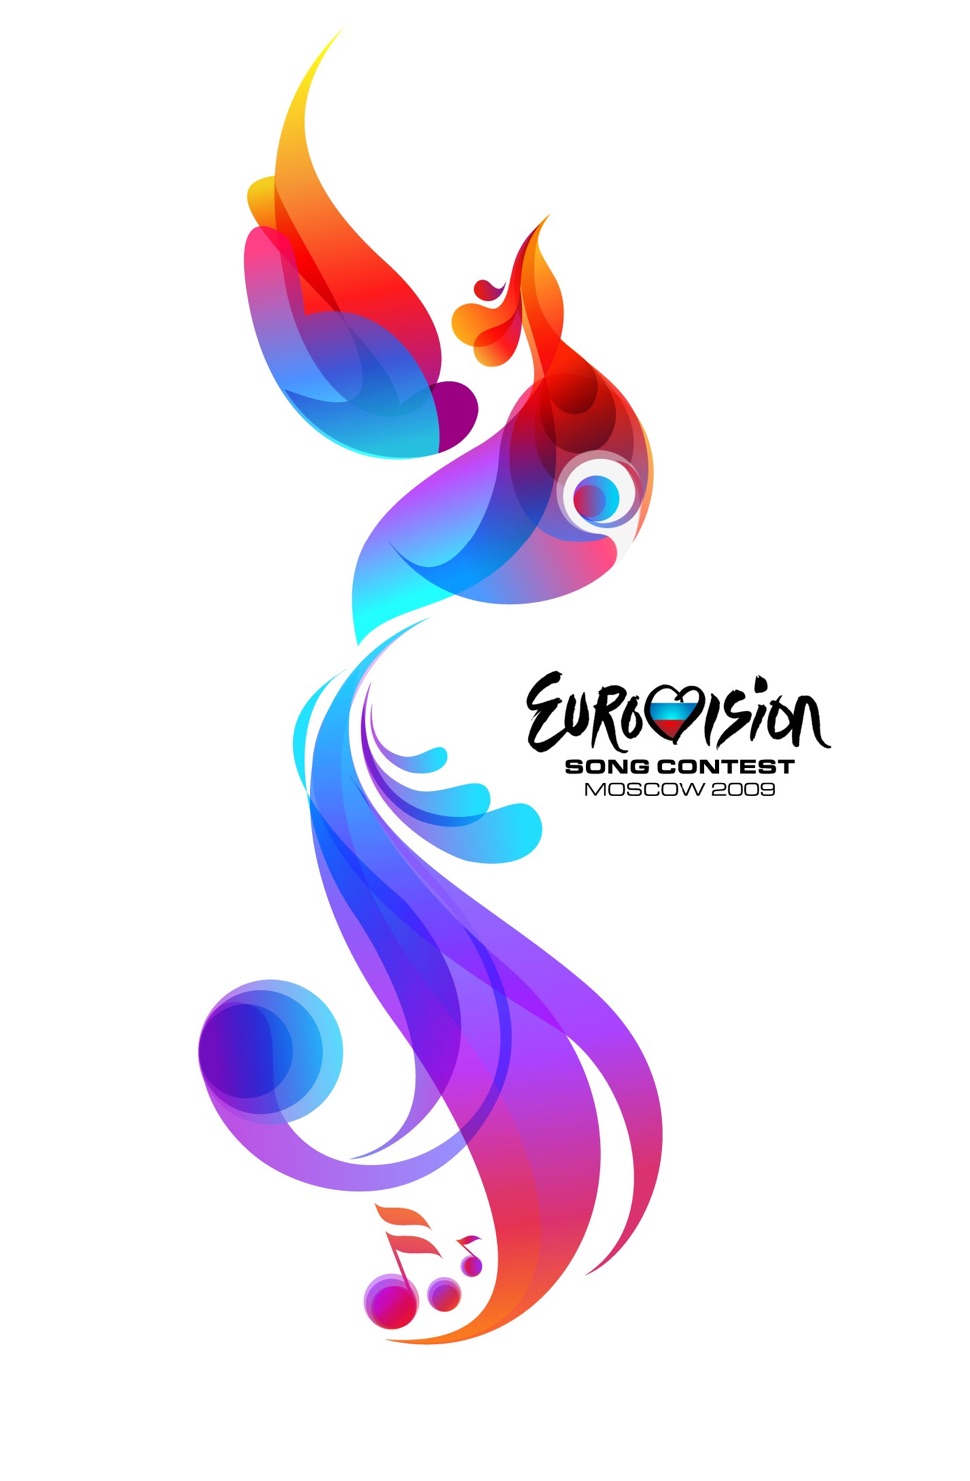 Rot-blauer Feuervogel: Das Logo des Eurovision Song Contests 2009 in Moskau